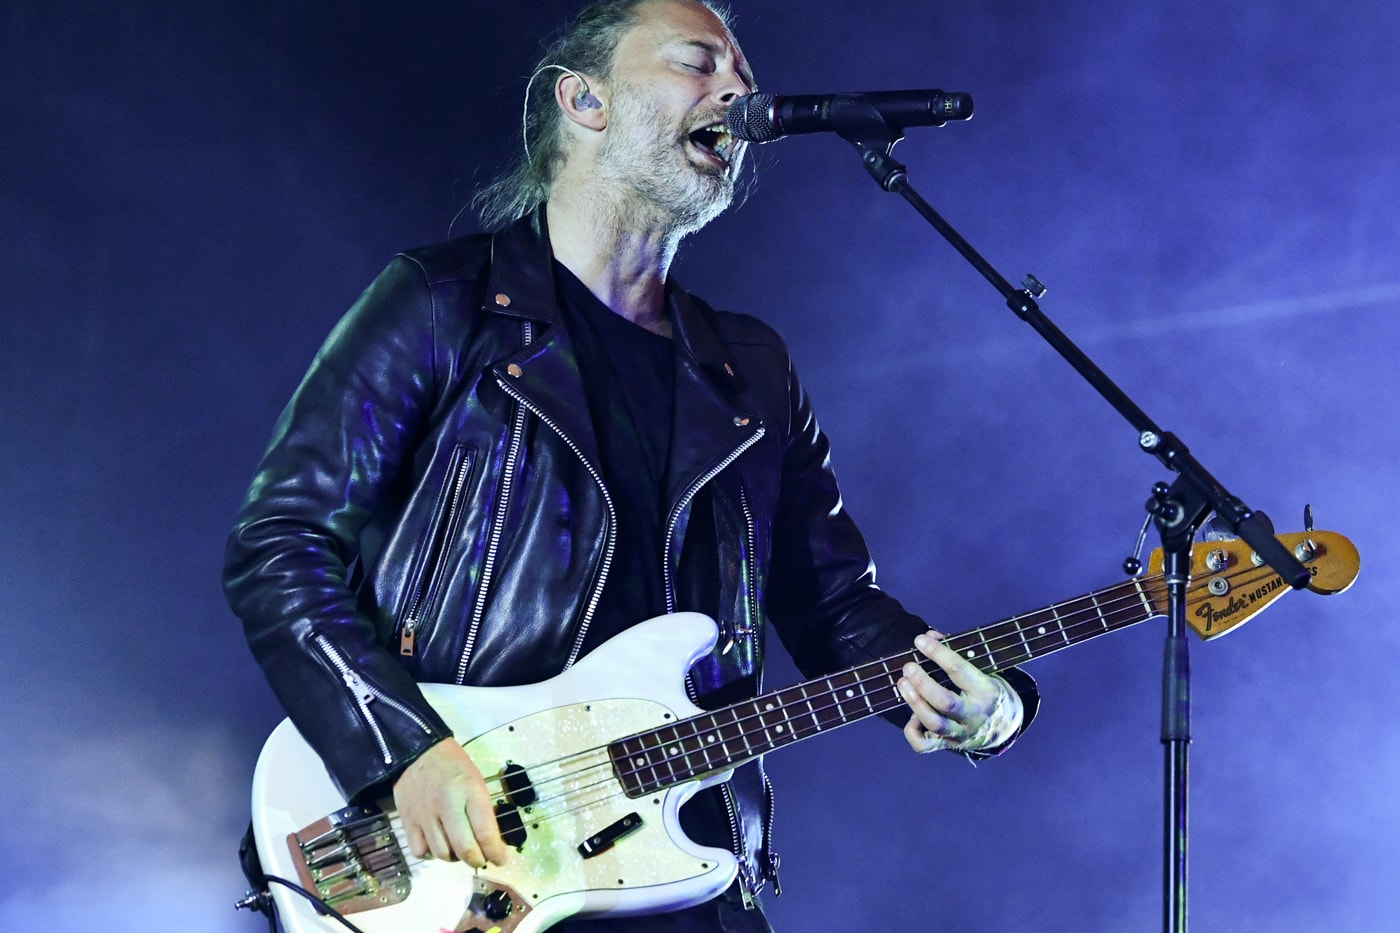 Thom Yorke 2020 Solo Tour Dates radiohead anima albums Nigel Godrich North America Europe Tarik Barri frontman singer songwriter